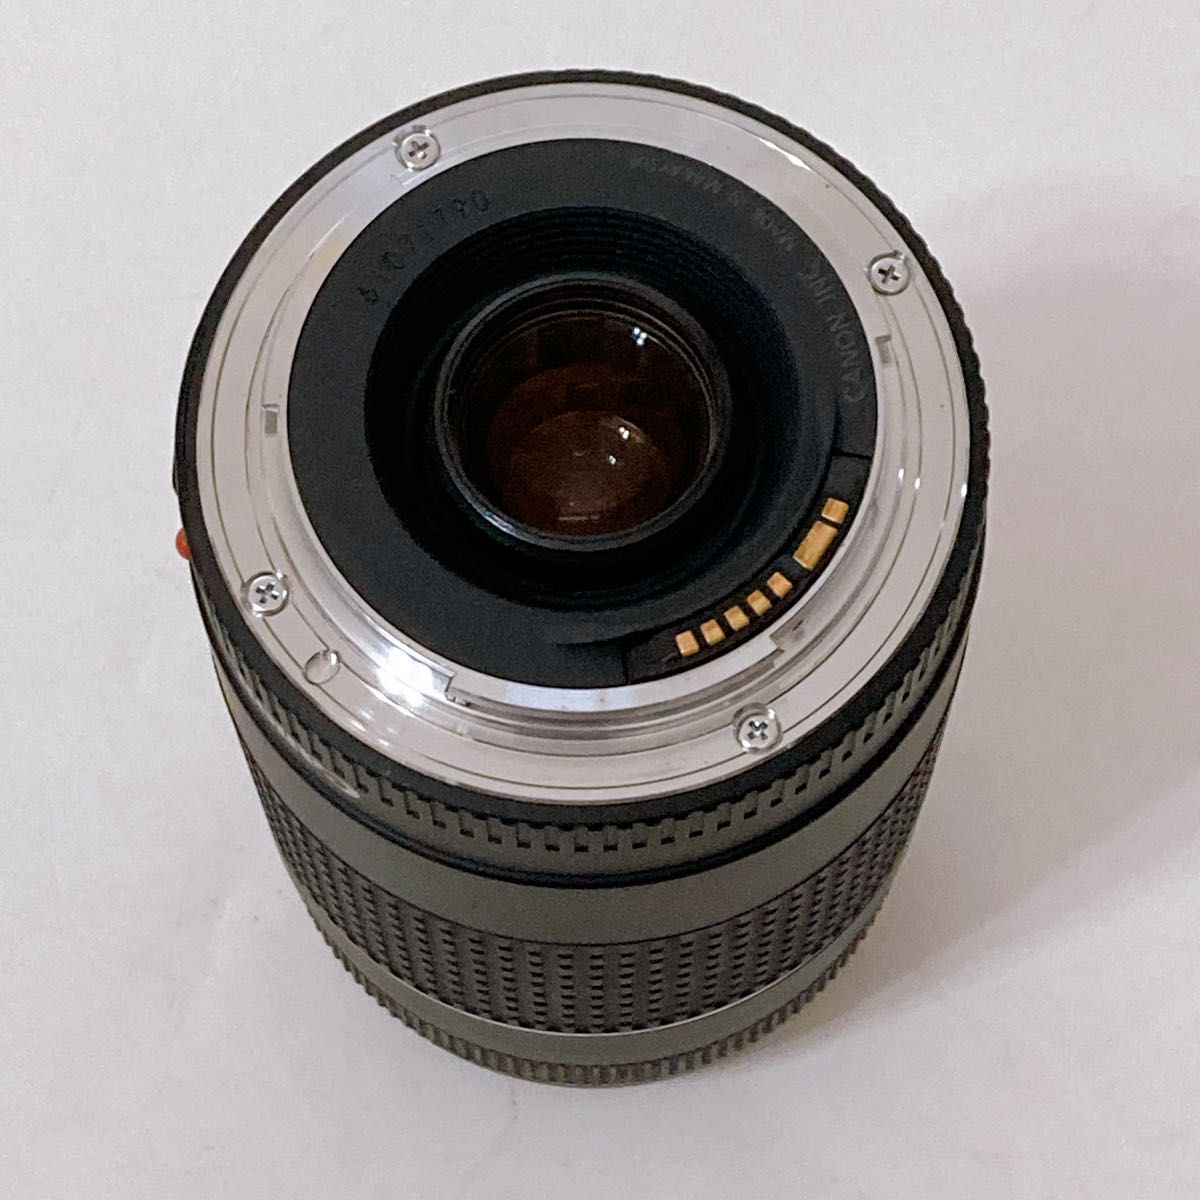 Canon EF 75-300mm 4-5.6 III USM キヤノン 望遠 ズームレンズ